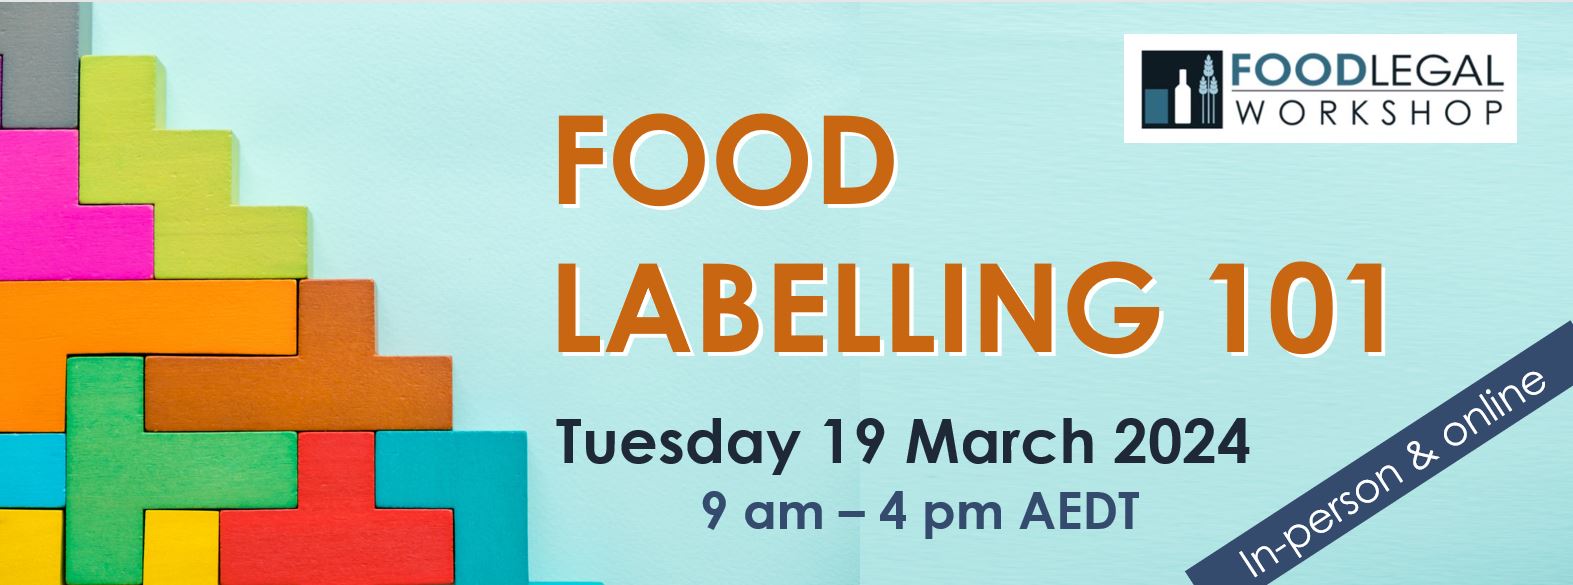  Mar 19, 2024 - Food Labelling 101 - full day workshop - 7 Hours